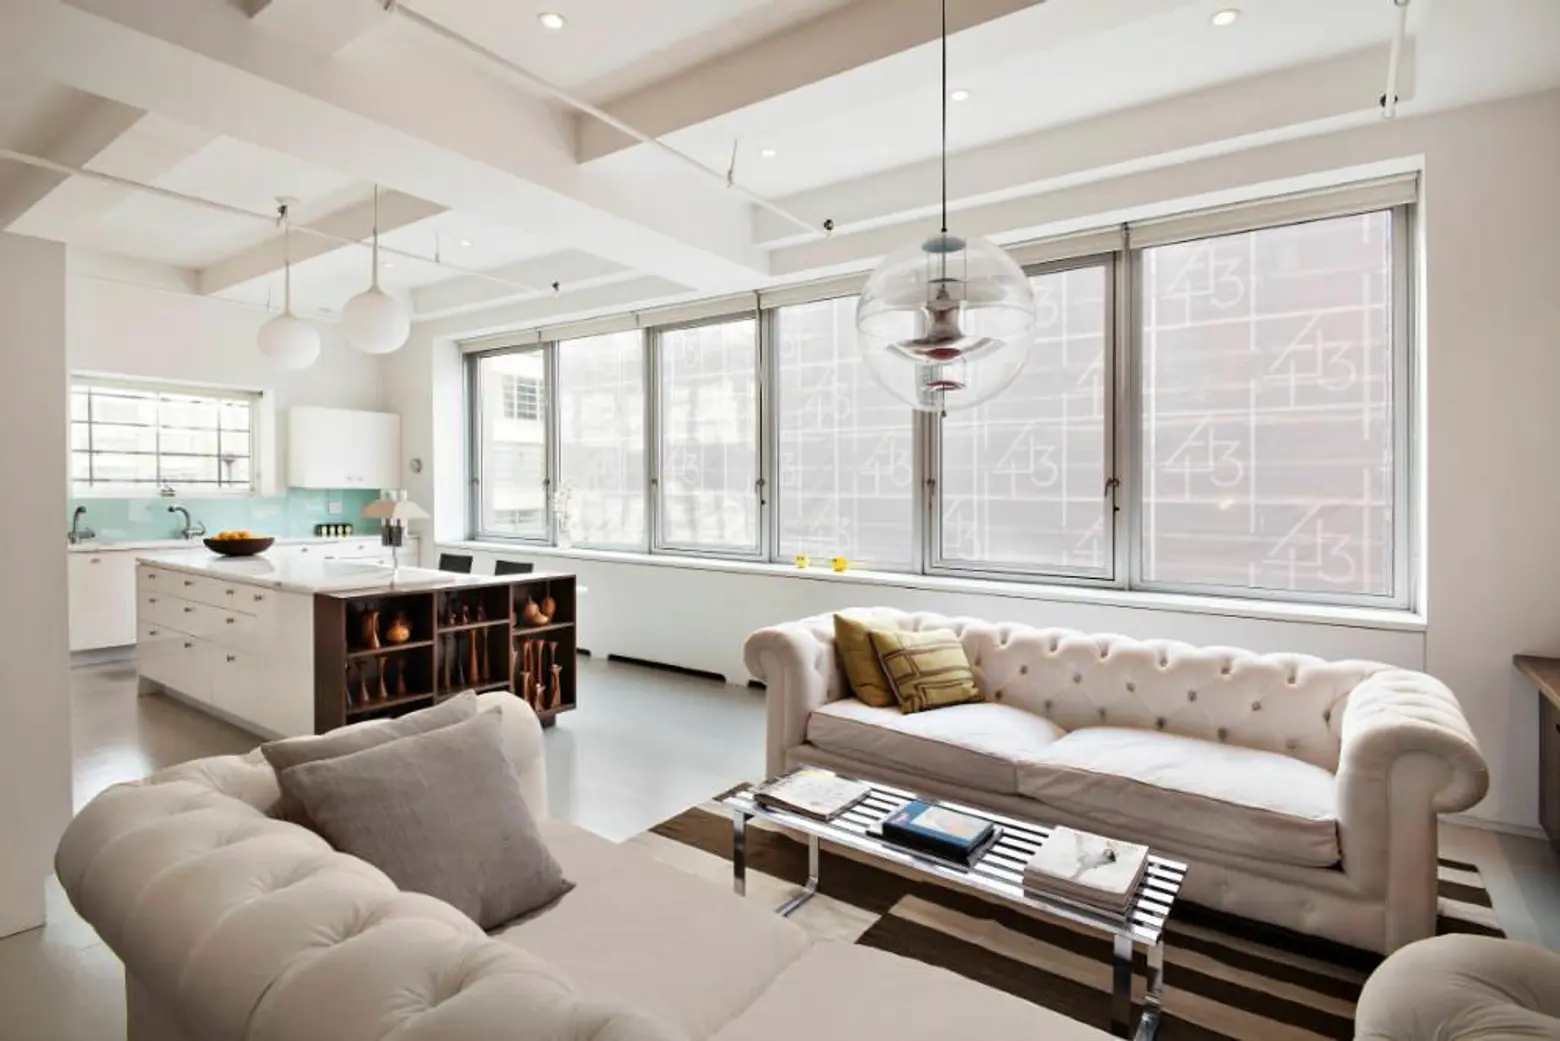 Lena Dunham’s Parents Sell Their Tribeca Loft for $6.25 Million